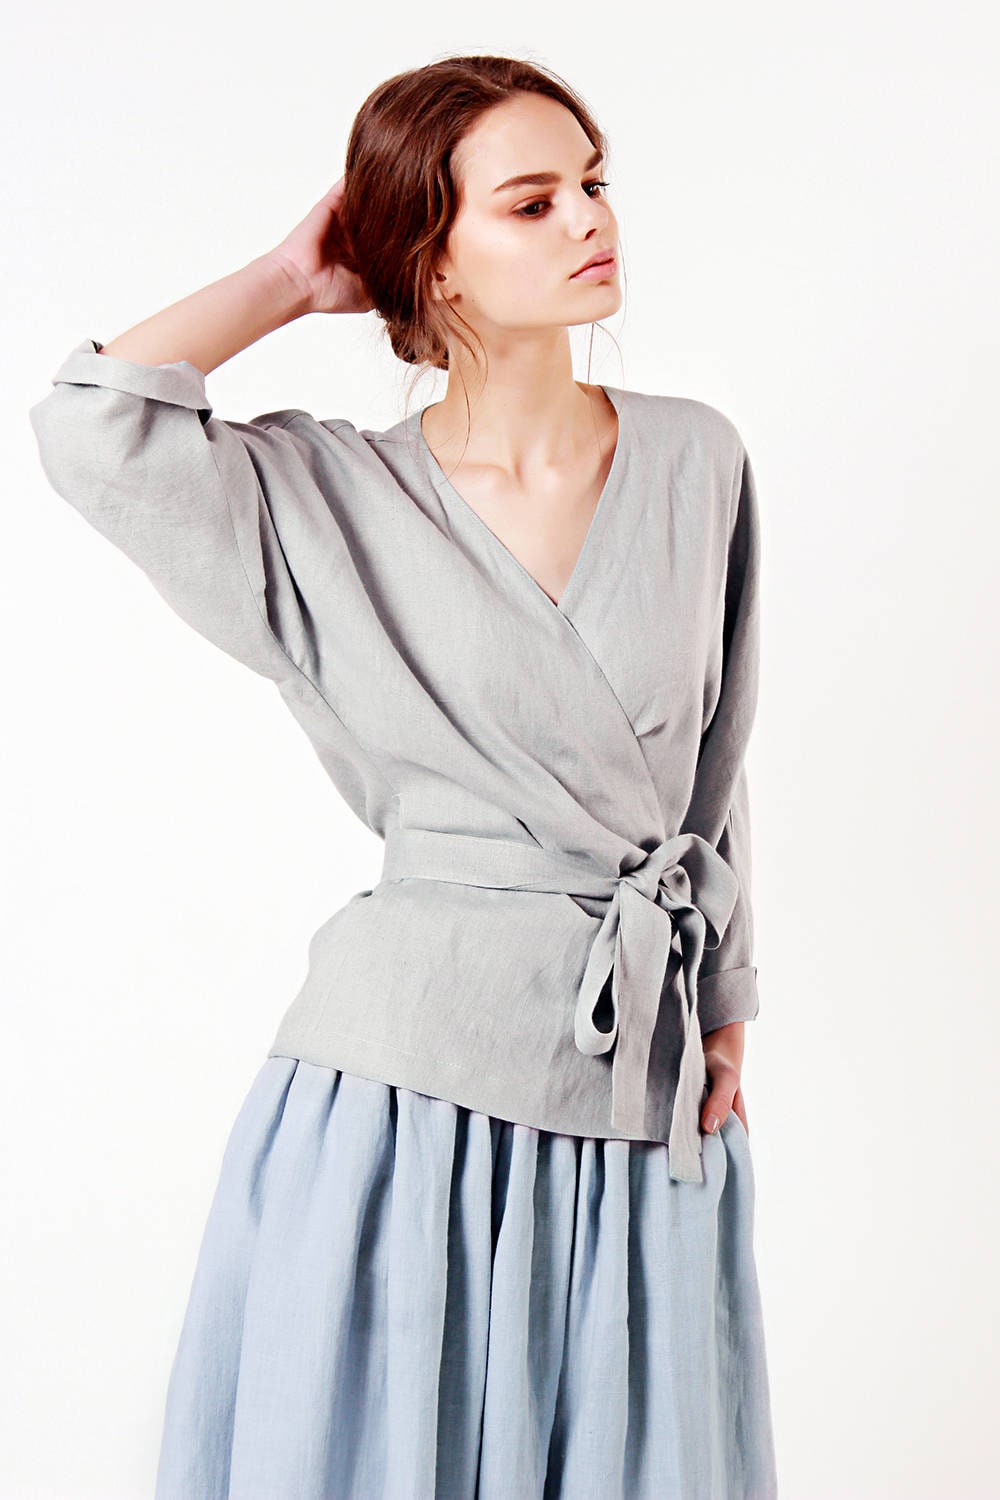 Linen Wrap Top Grey Linen Top Linen Tops for Woman Linen | Etsy